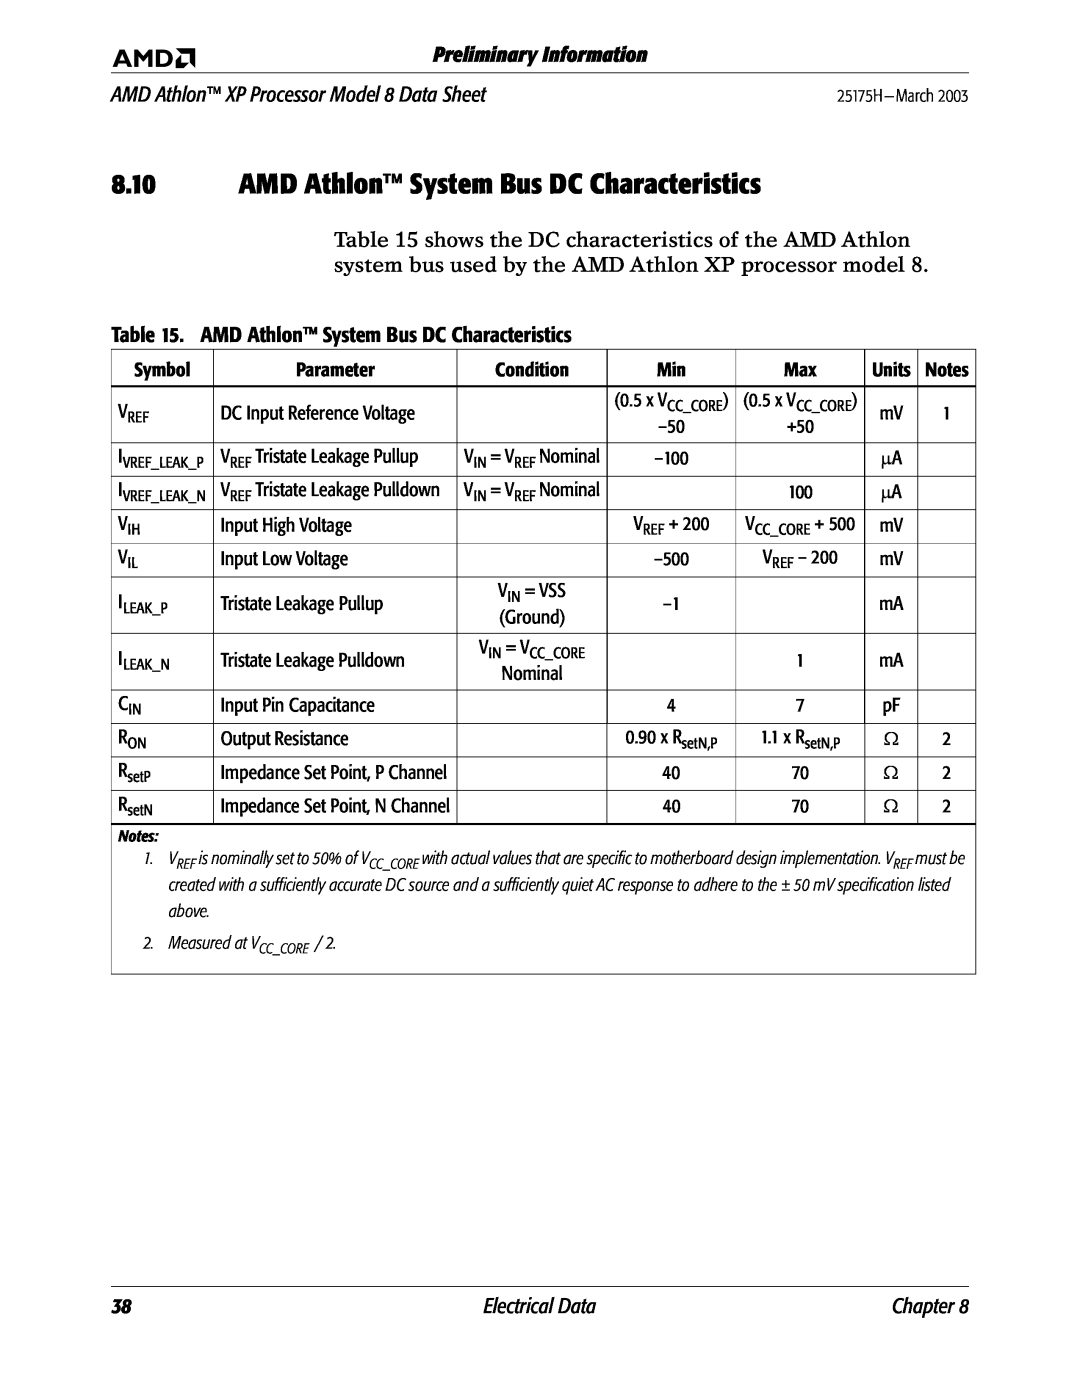 AMD manual AMD Athlon System Bus DC Characteristics, Preliminary Information, AMD Athlon XP Processor Model 8 Data Sheet 